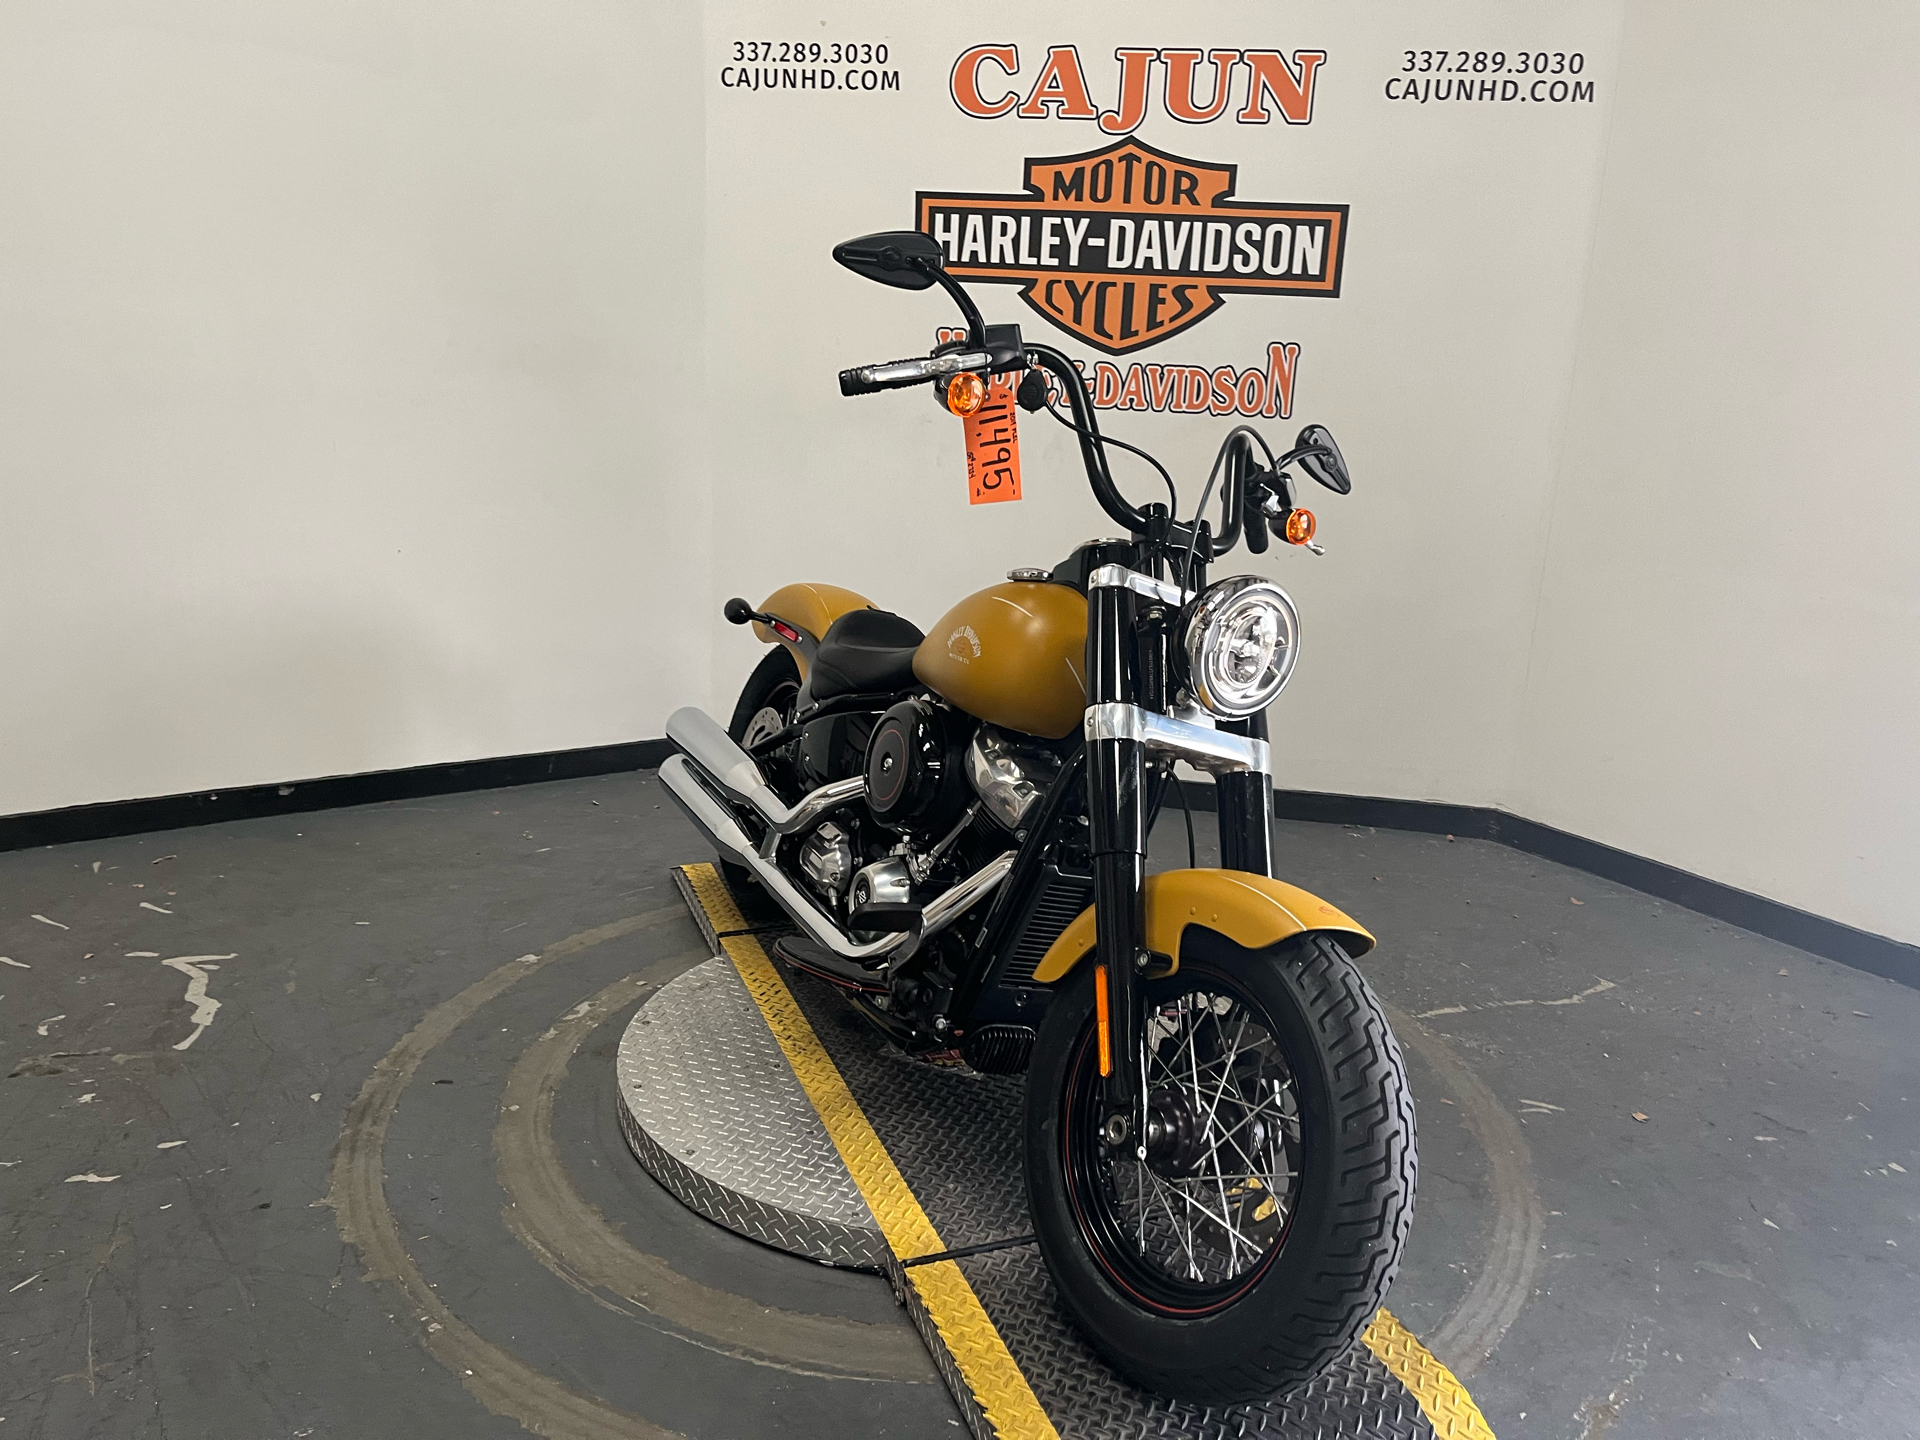 2019 Harley-Davidson Softail Slim® in Scott, Louisiana - Photo 5